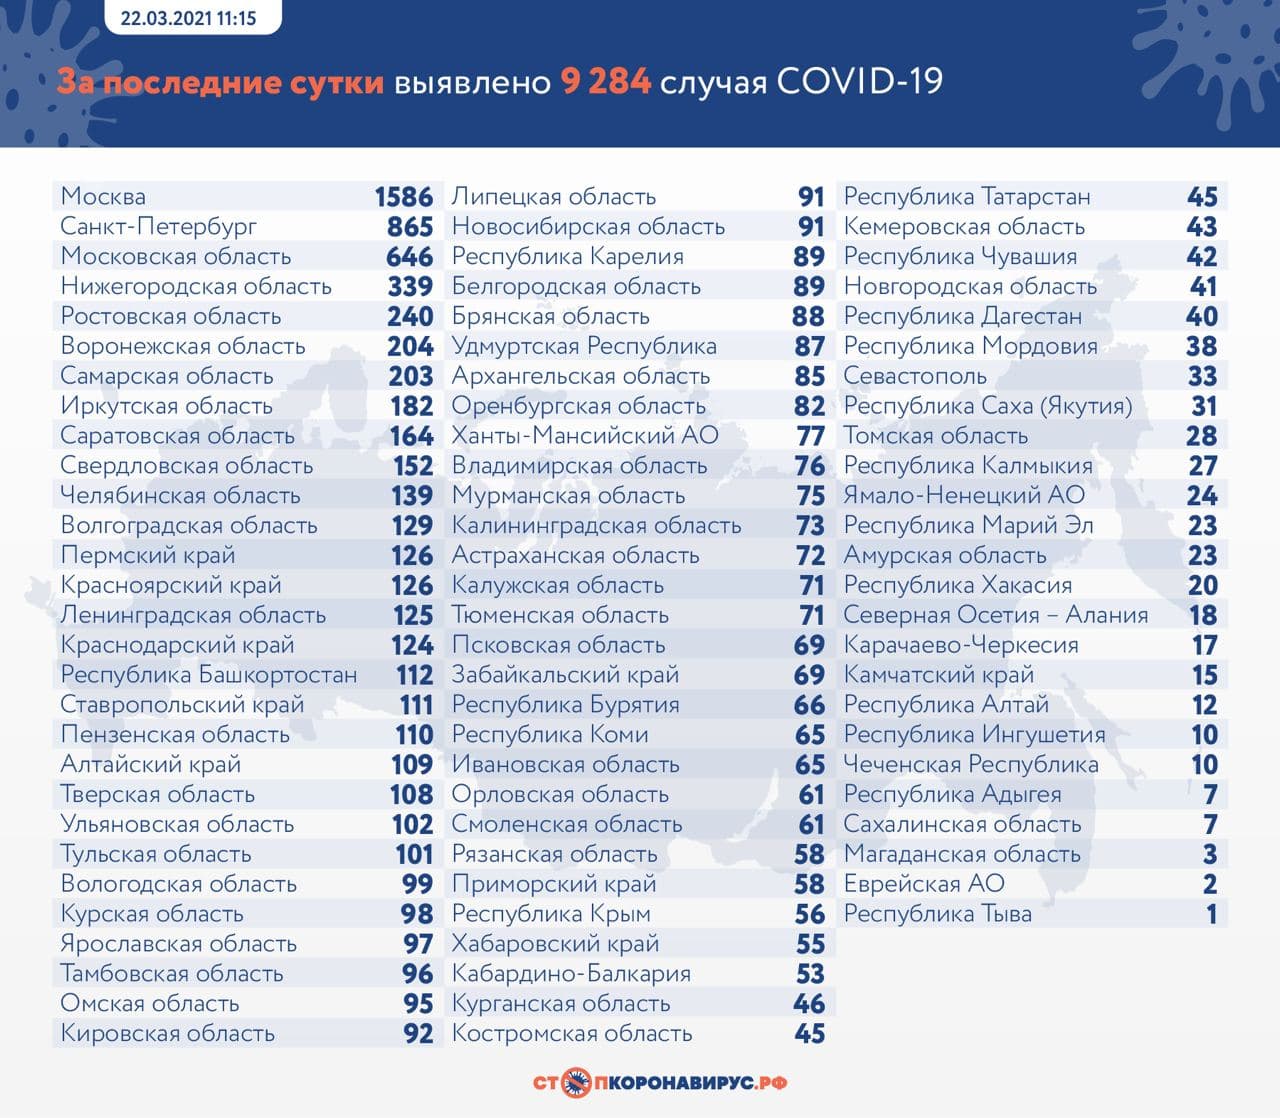 Оперативная статистика по коронавирусу в России на 22 марта